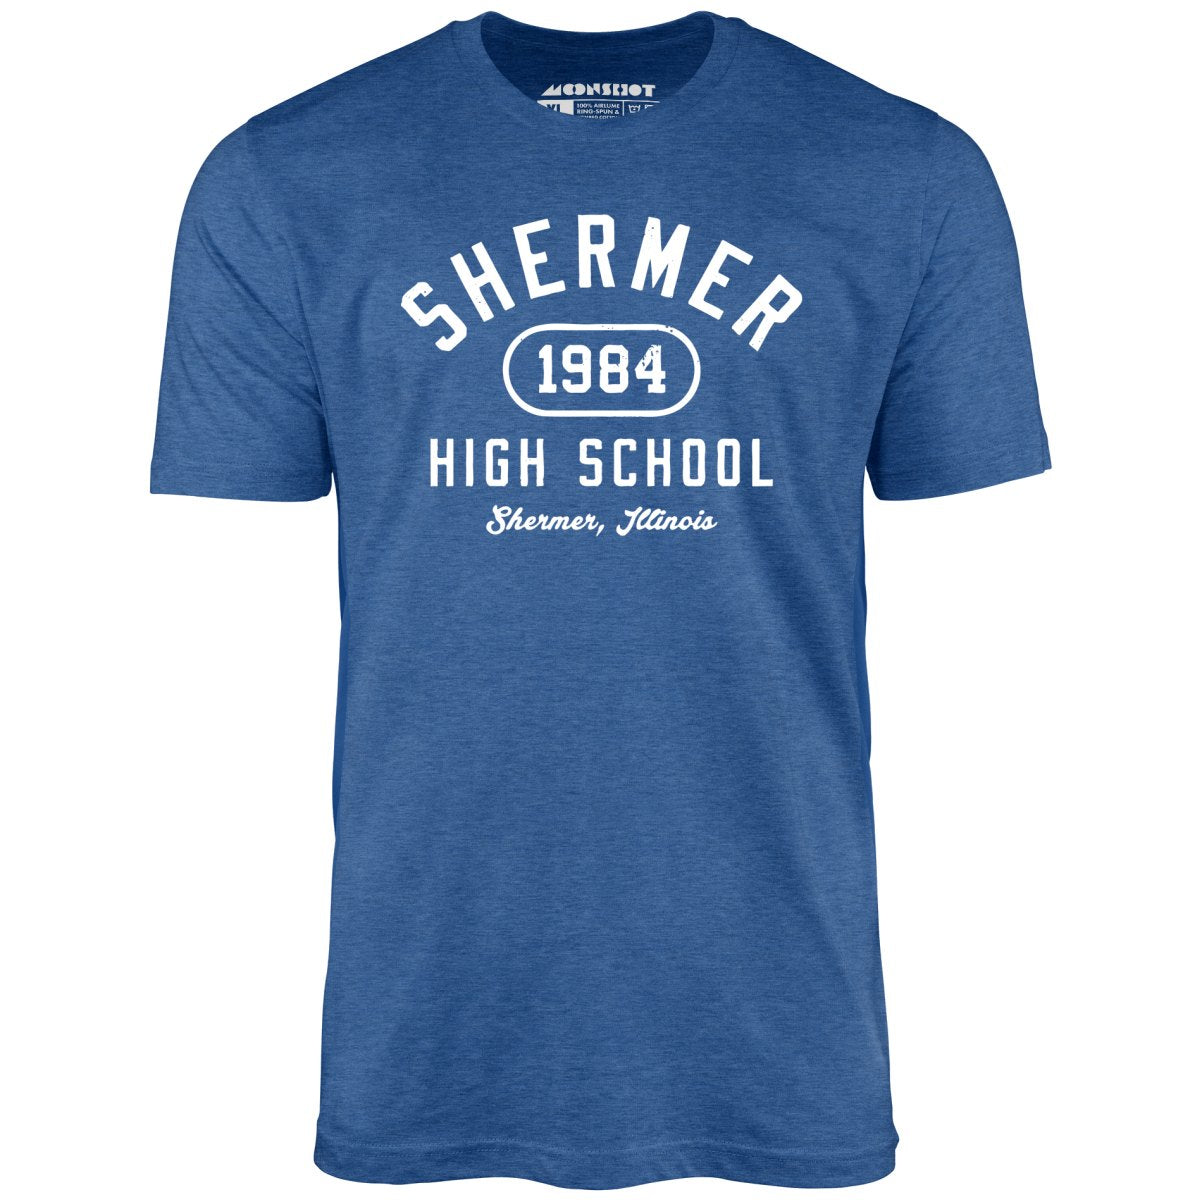 Shermer High School 1984 - Unisex T-Shirt